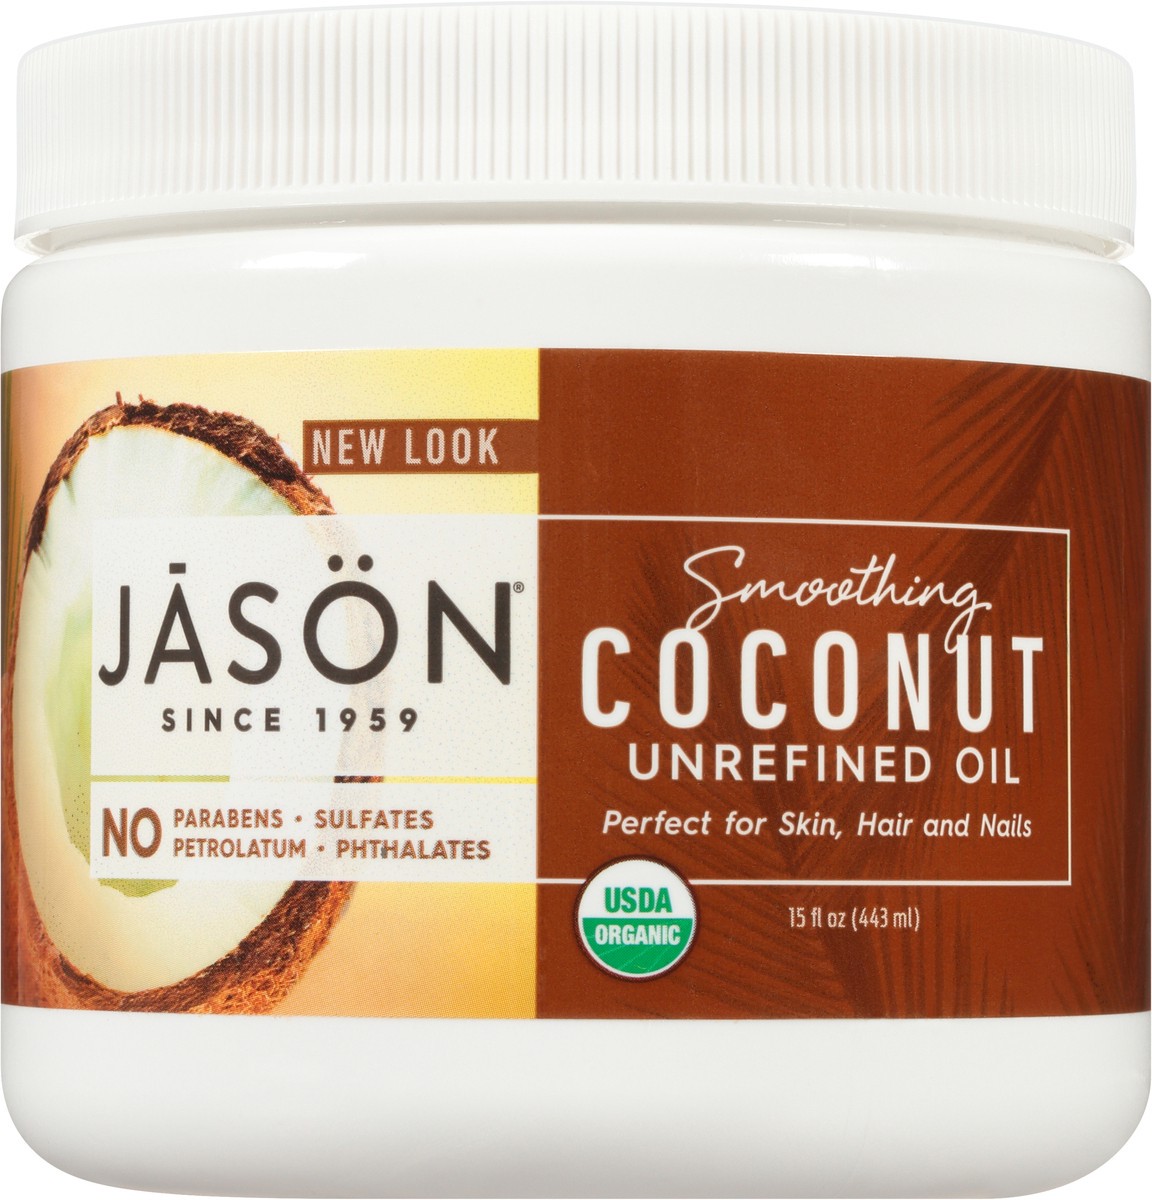 slide 4 of 10, JASON Smoothing Coconut Unrefined Oil 15 fl. oz. Jar, 15 fl oz